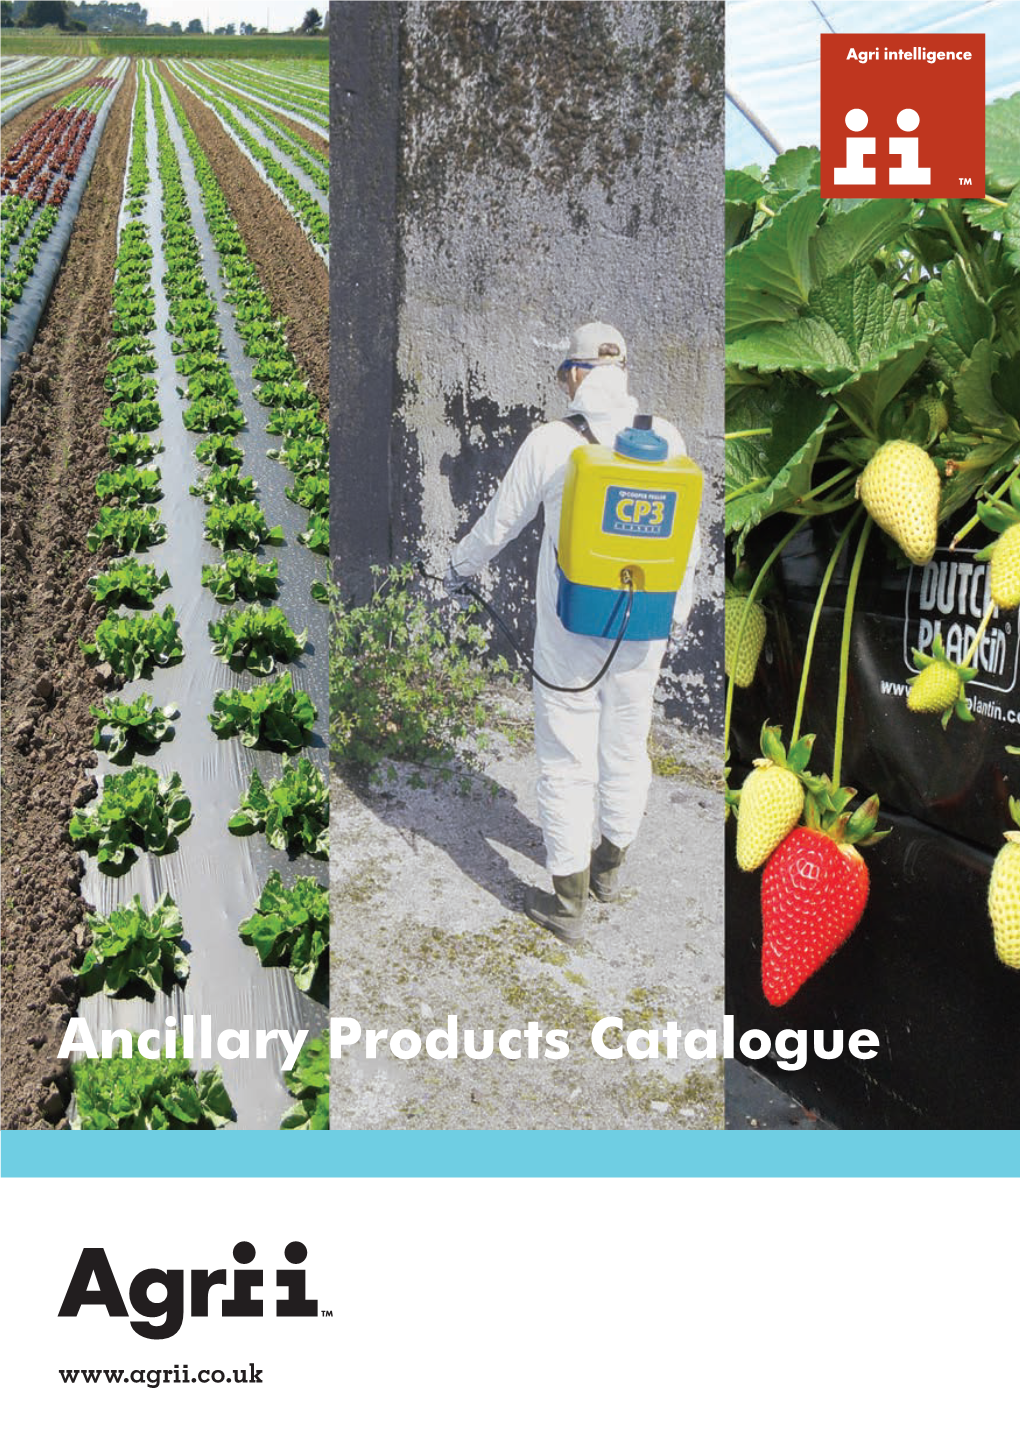 Ancillary Products Catalogue